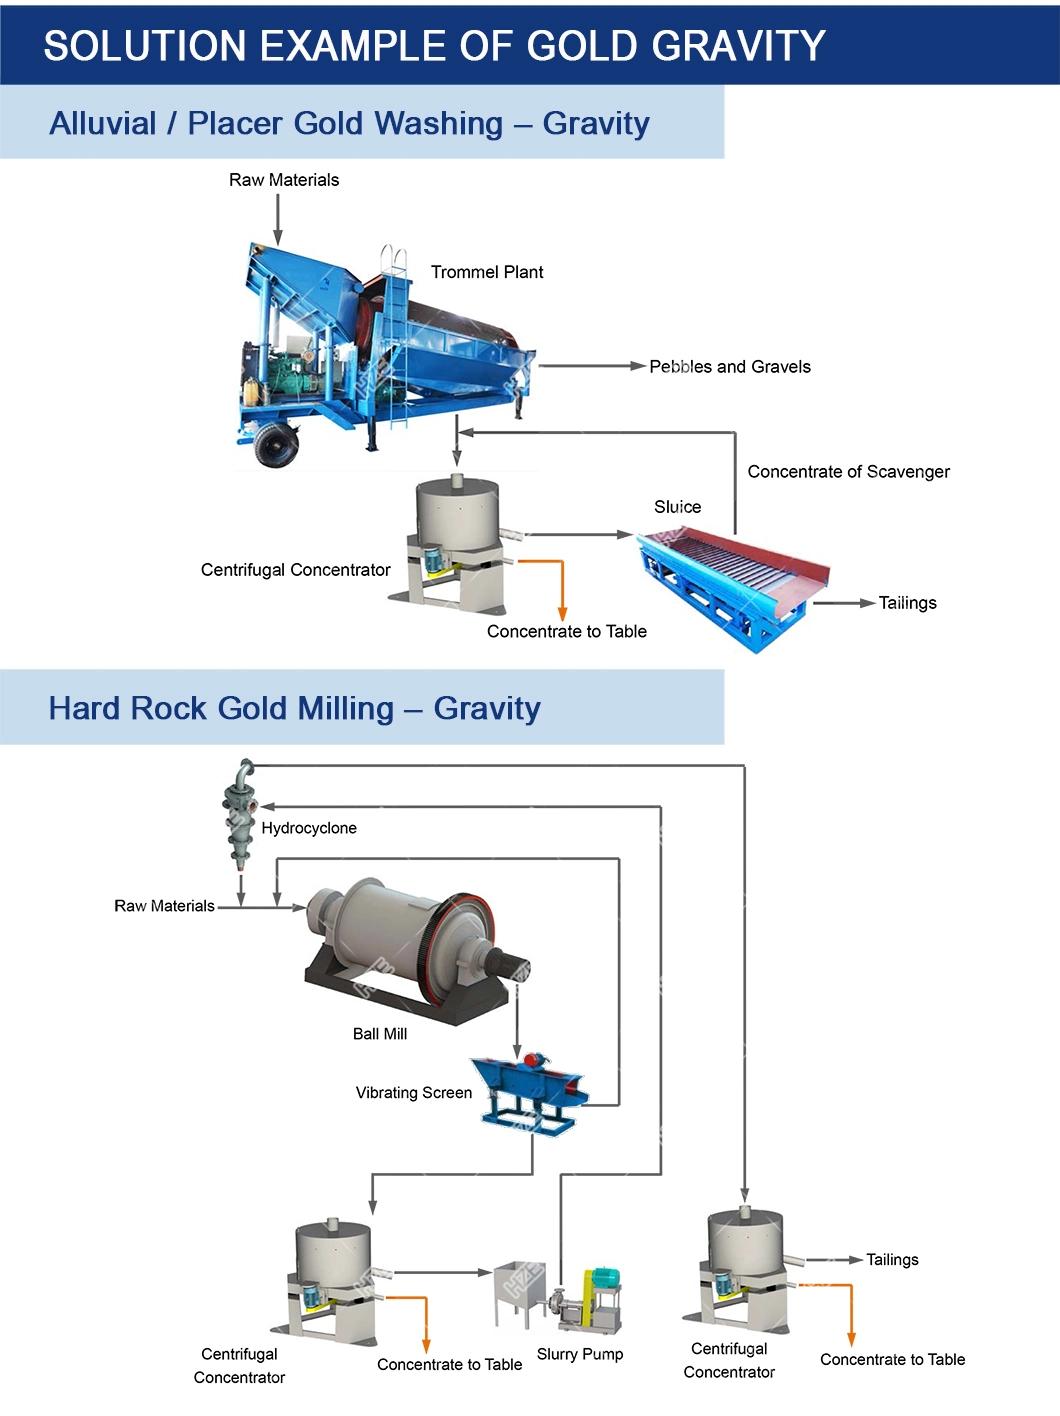 Centrifuge Cconcentrator for Placer Gold Mining